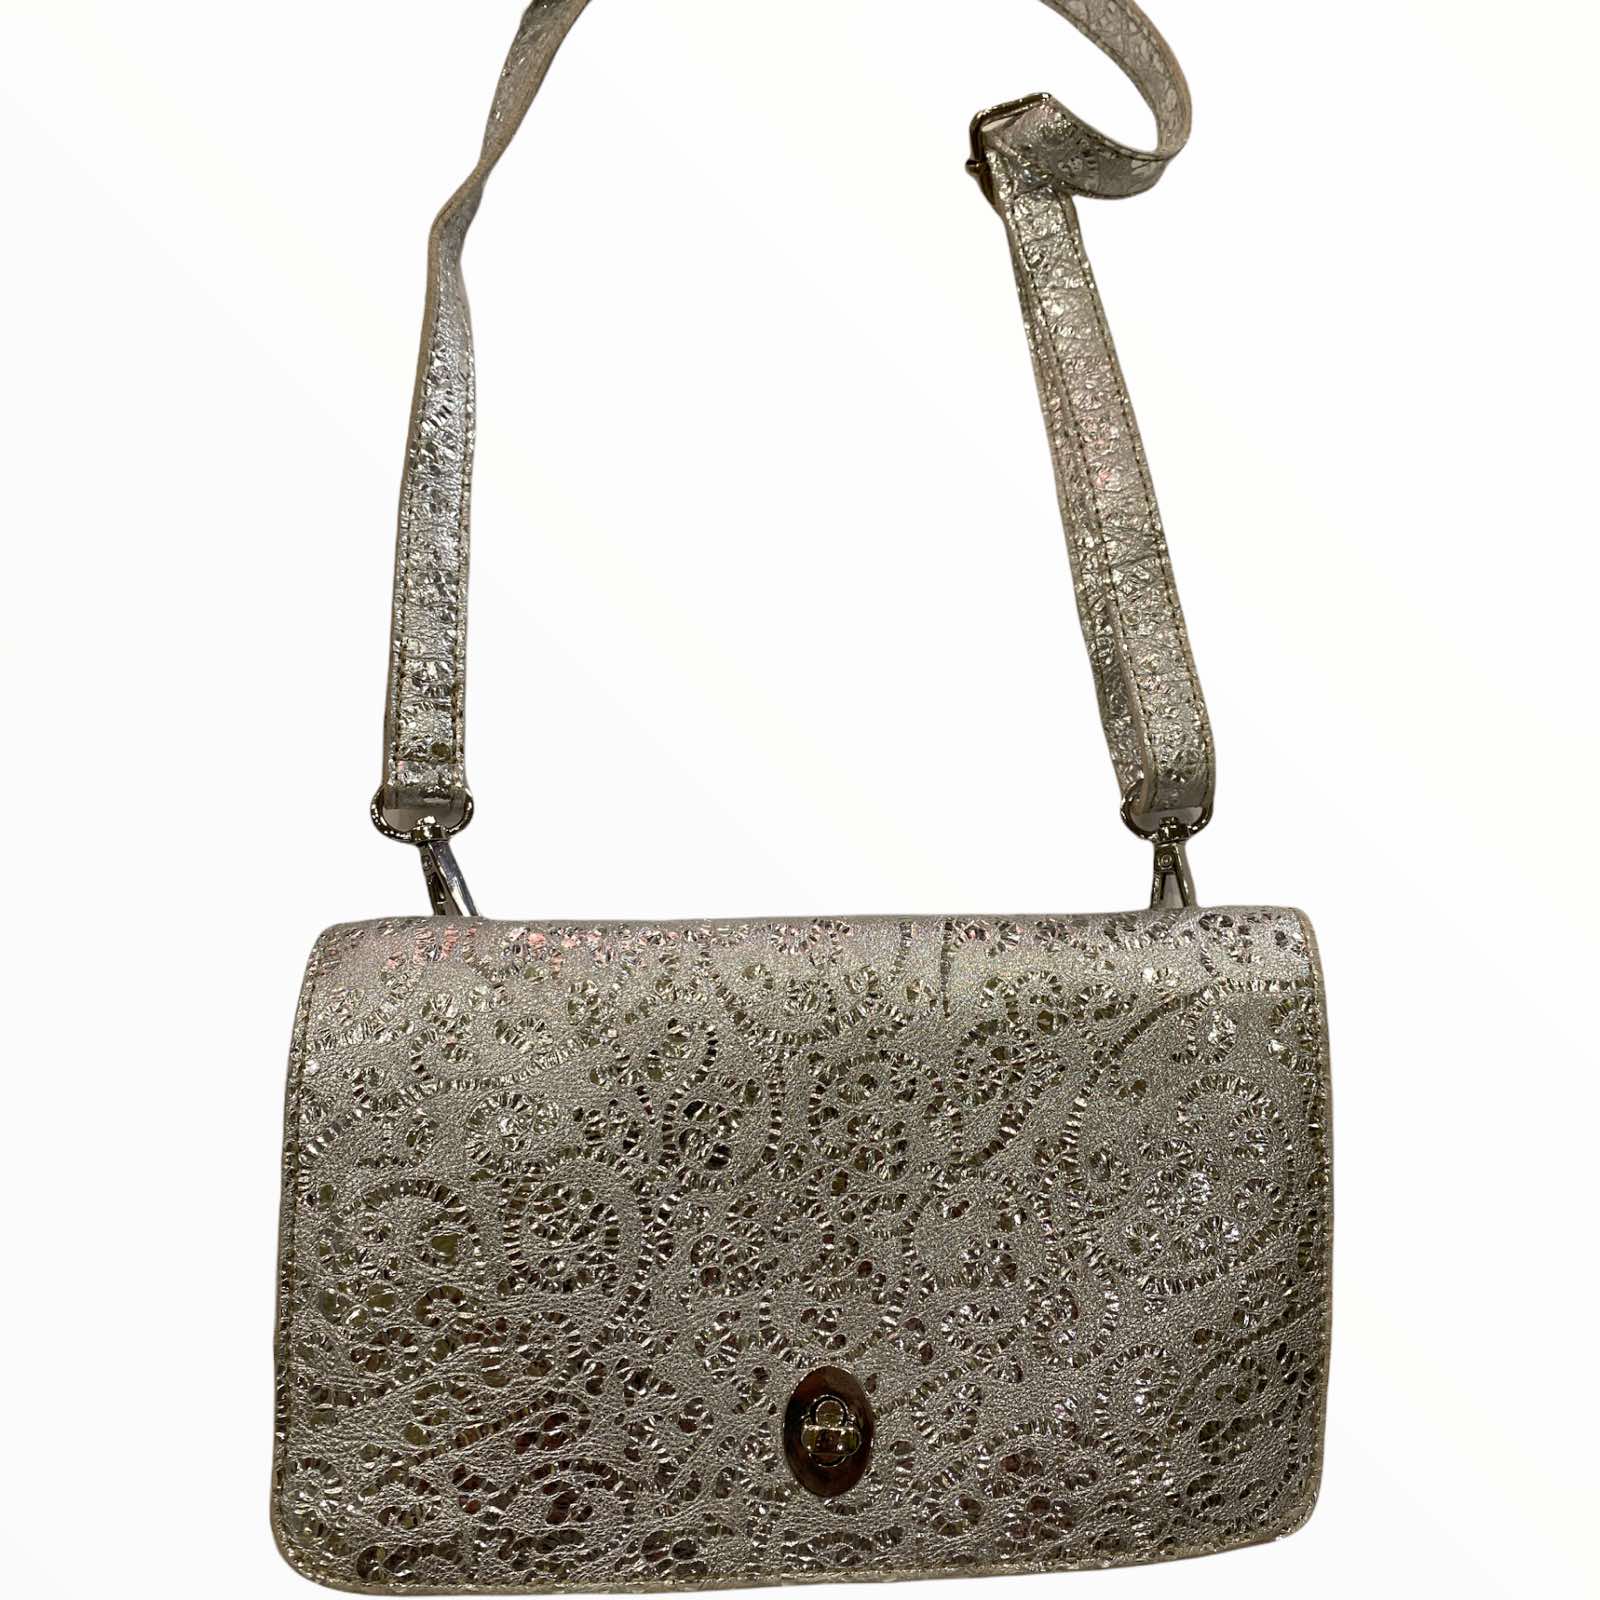 Silver art leather multi wallet bag